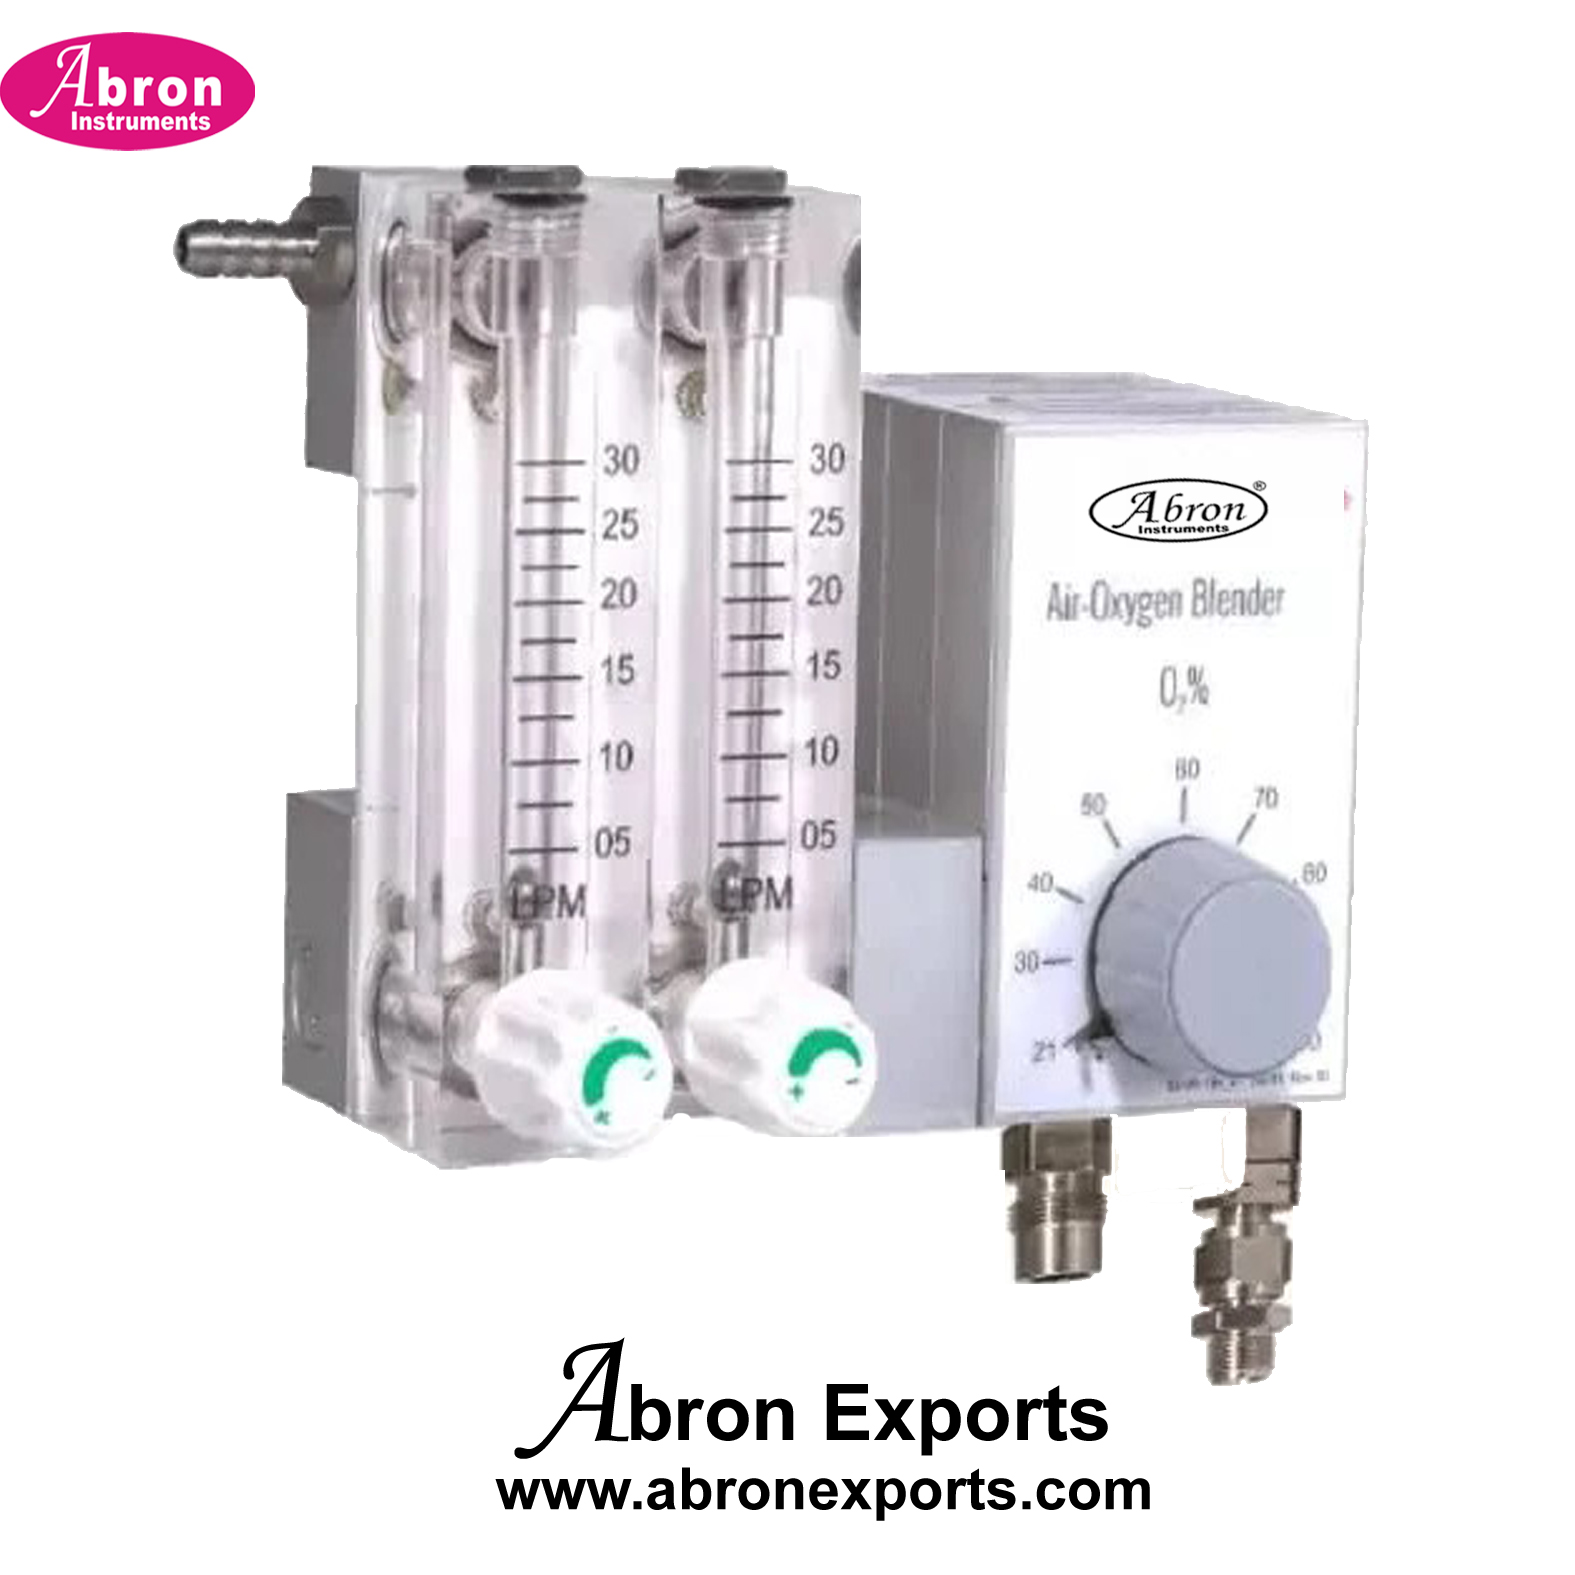 Air Oxygen Blender Neonatal Flowmeter Regulator 60 LPM Diagnostic Hospital Medical Abron AB M-2365FM